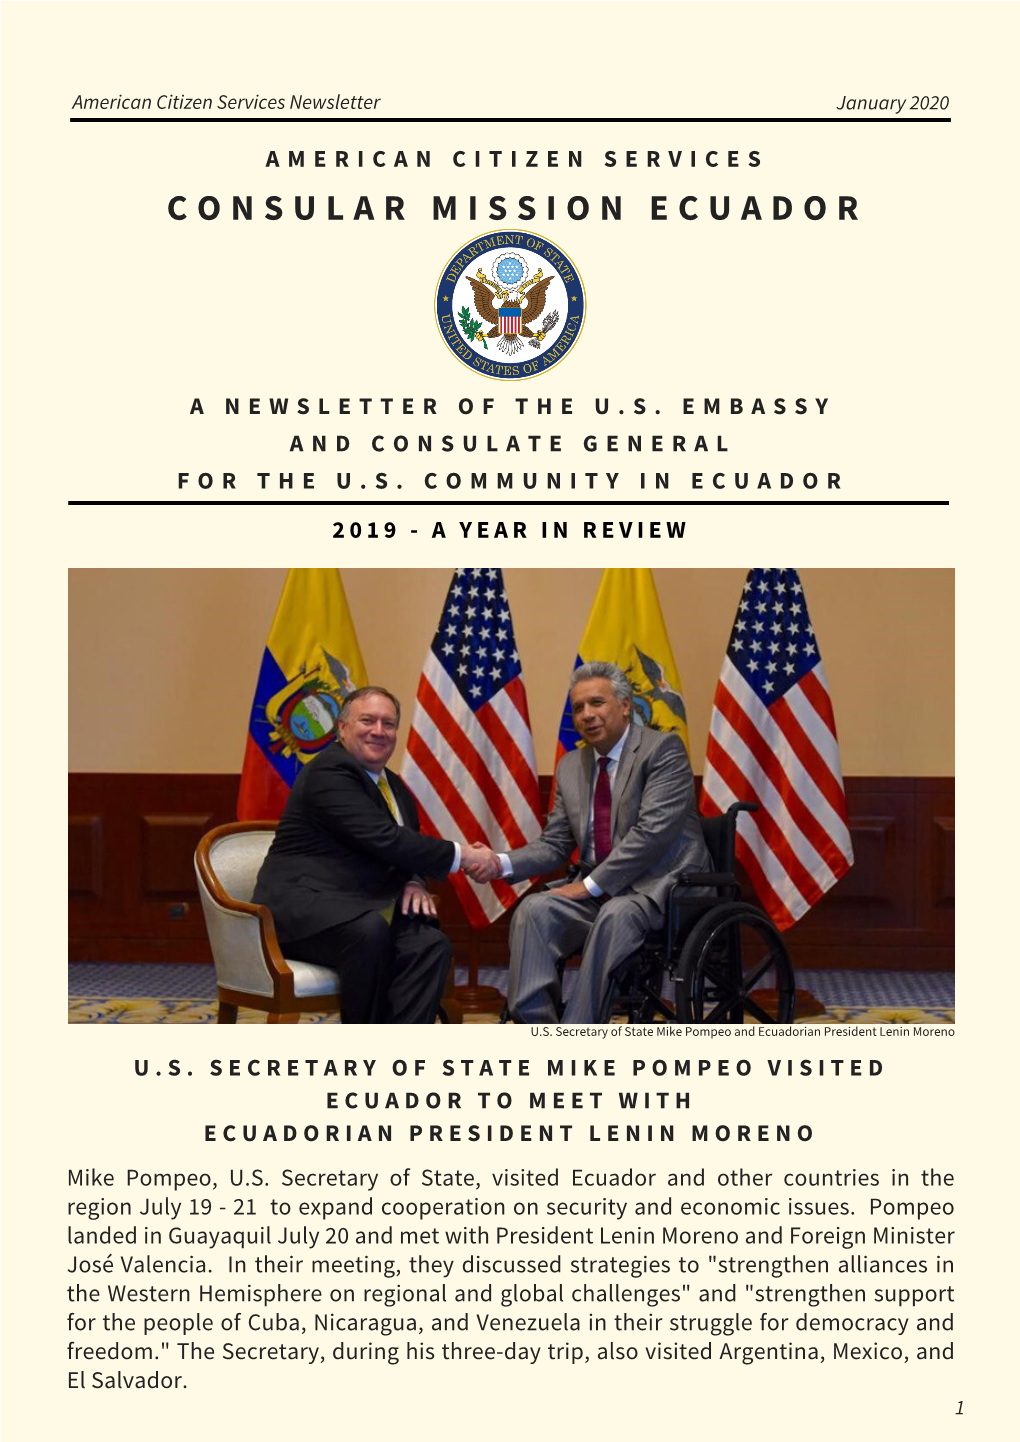 American Citizen Services Consular Mission Ecuador Newsletter